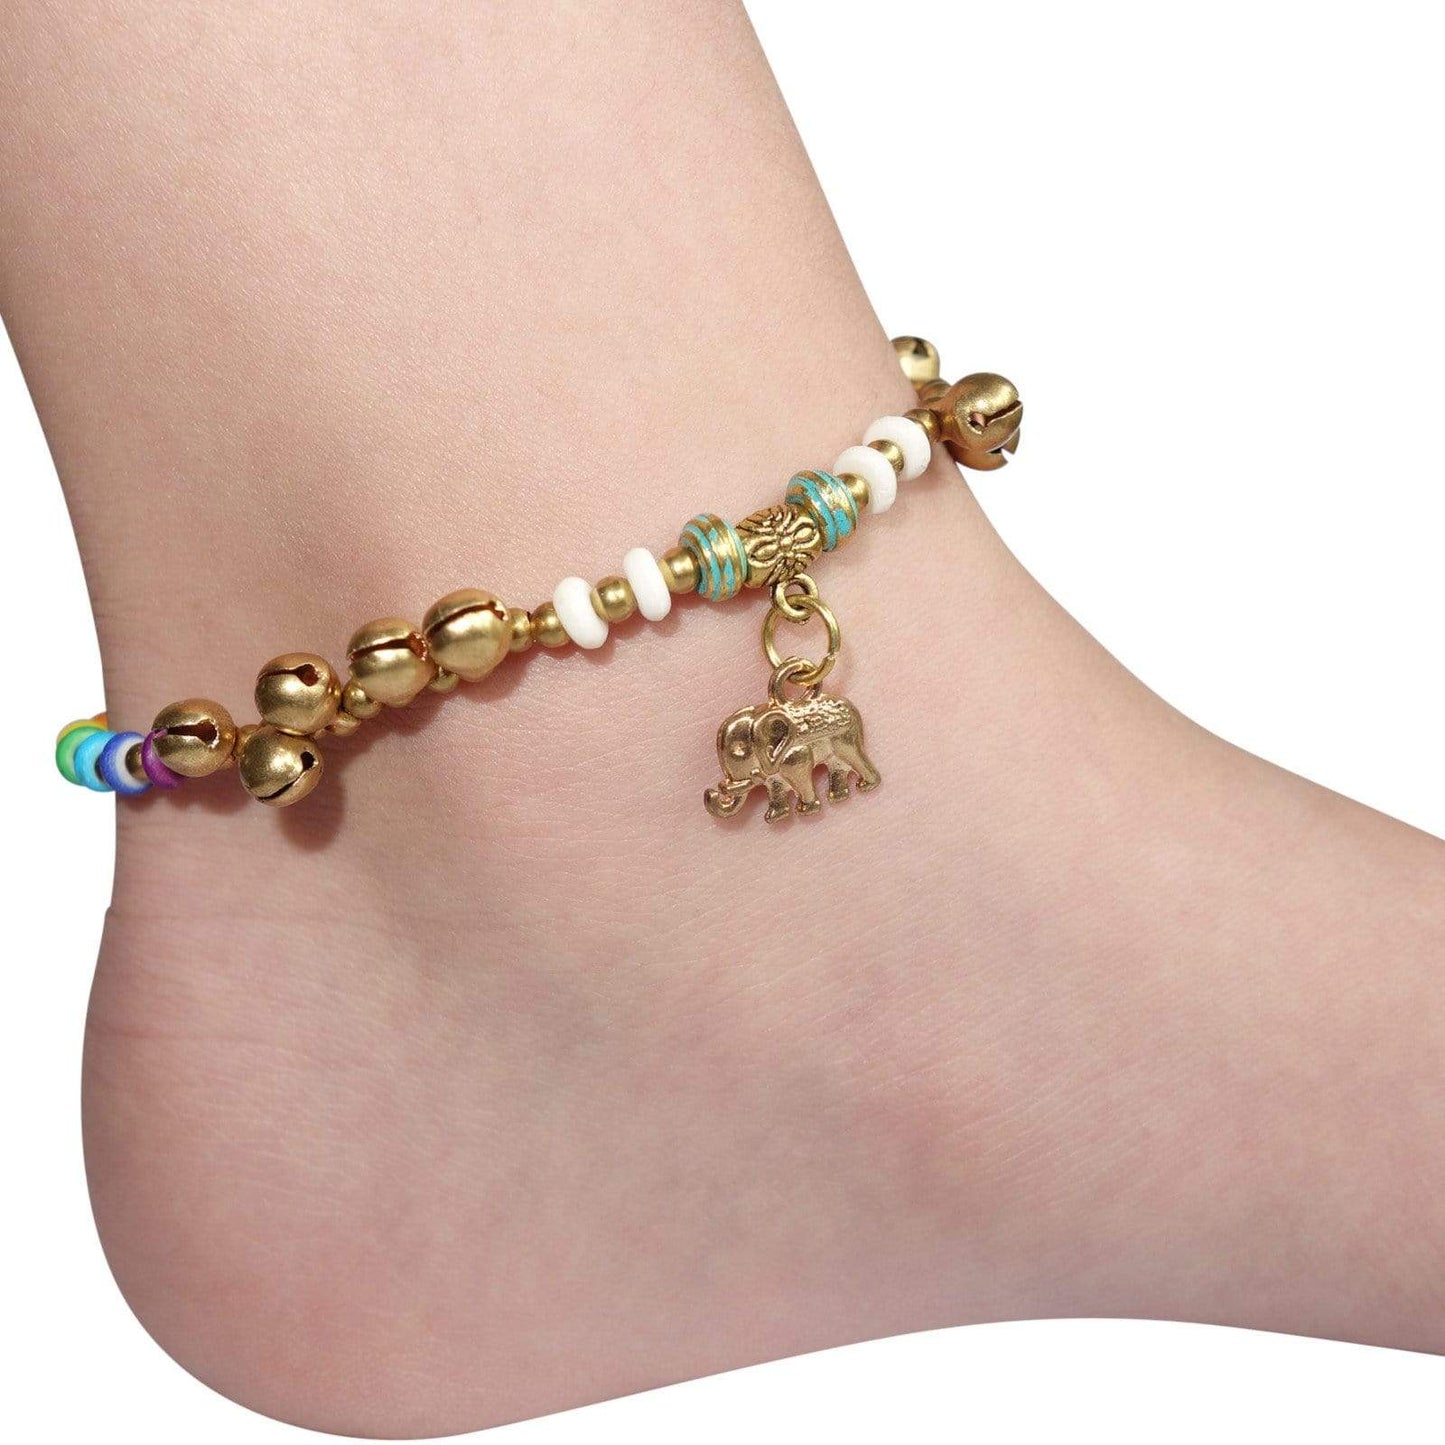 Elephant Anklet Foot Chain Ankle Bracelet Bells Rainbow Gold Colour Jewellery